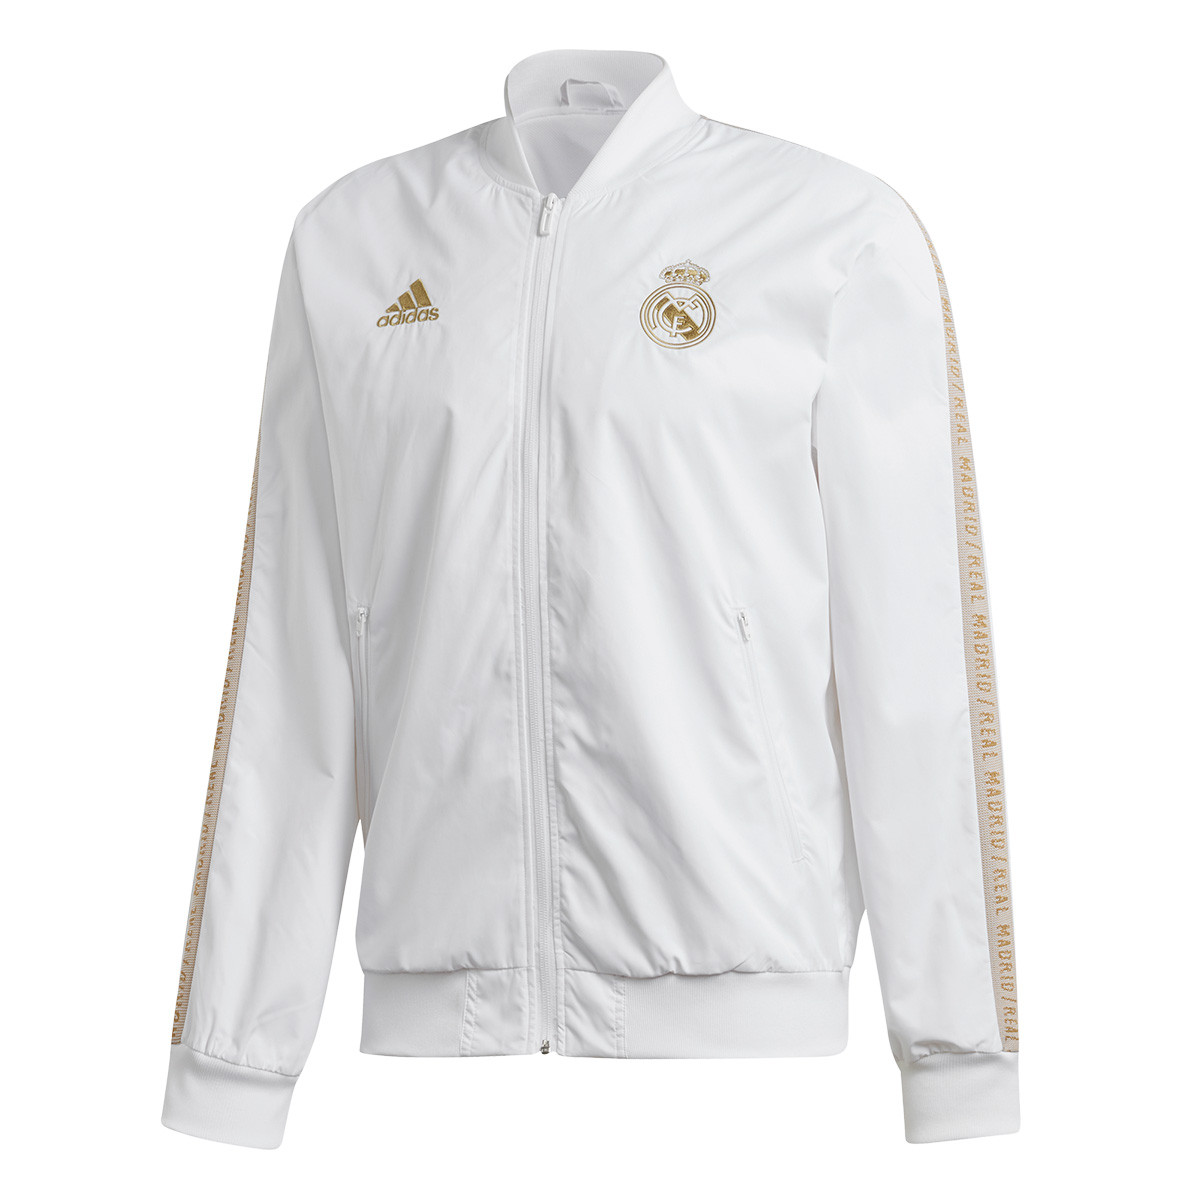 white and gold adidas jacket